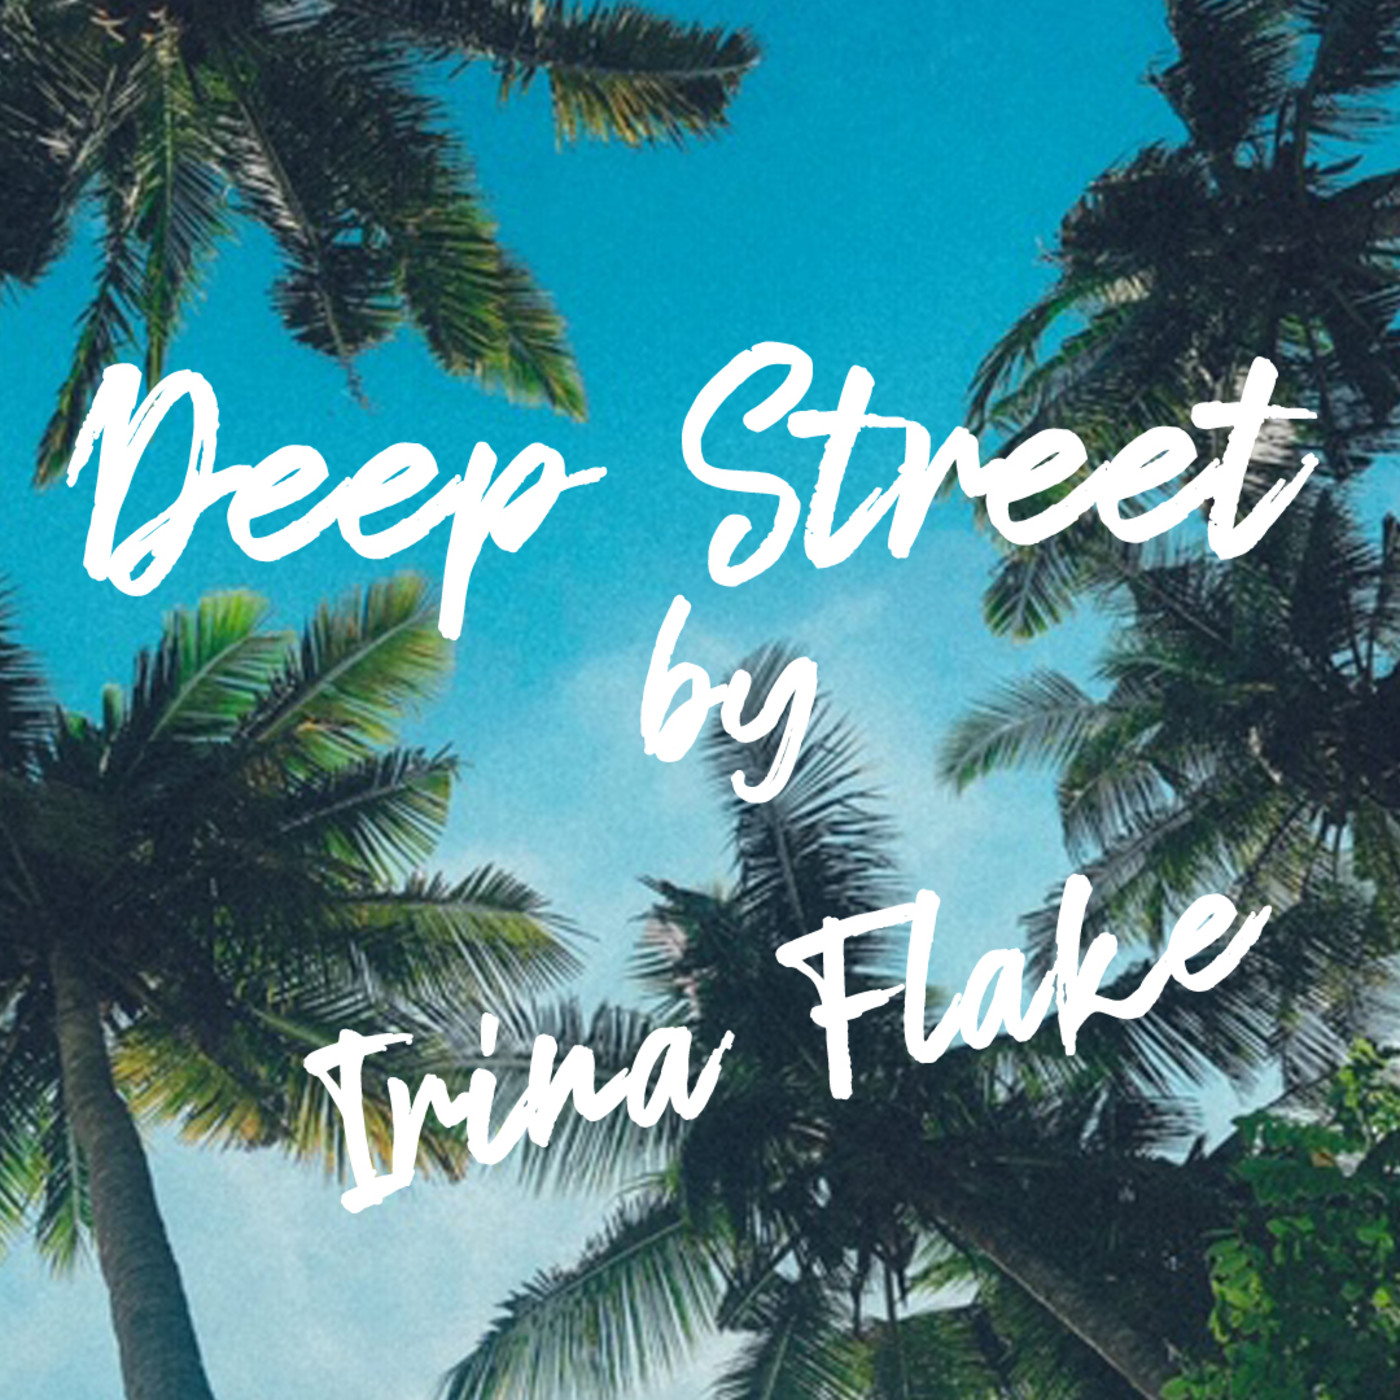 Deep Street by Irina Flake 03 @ Flaix FM 14.04.19